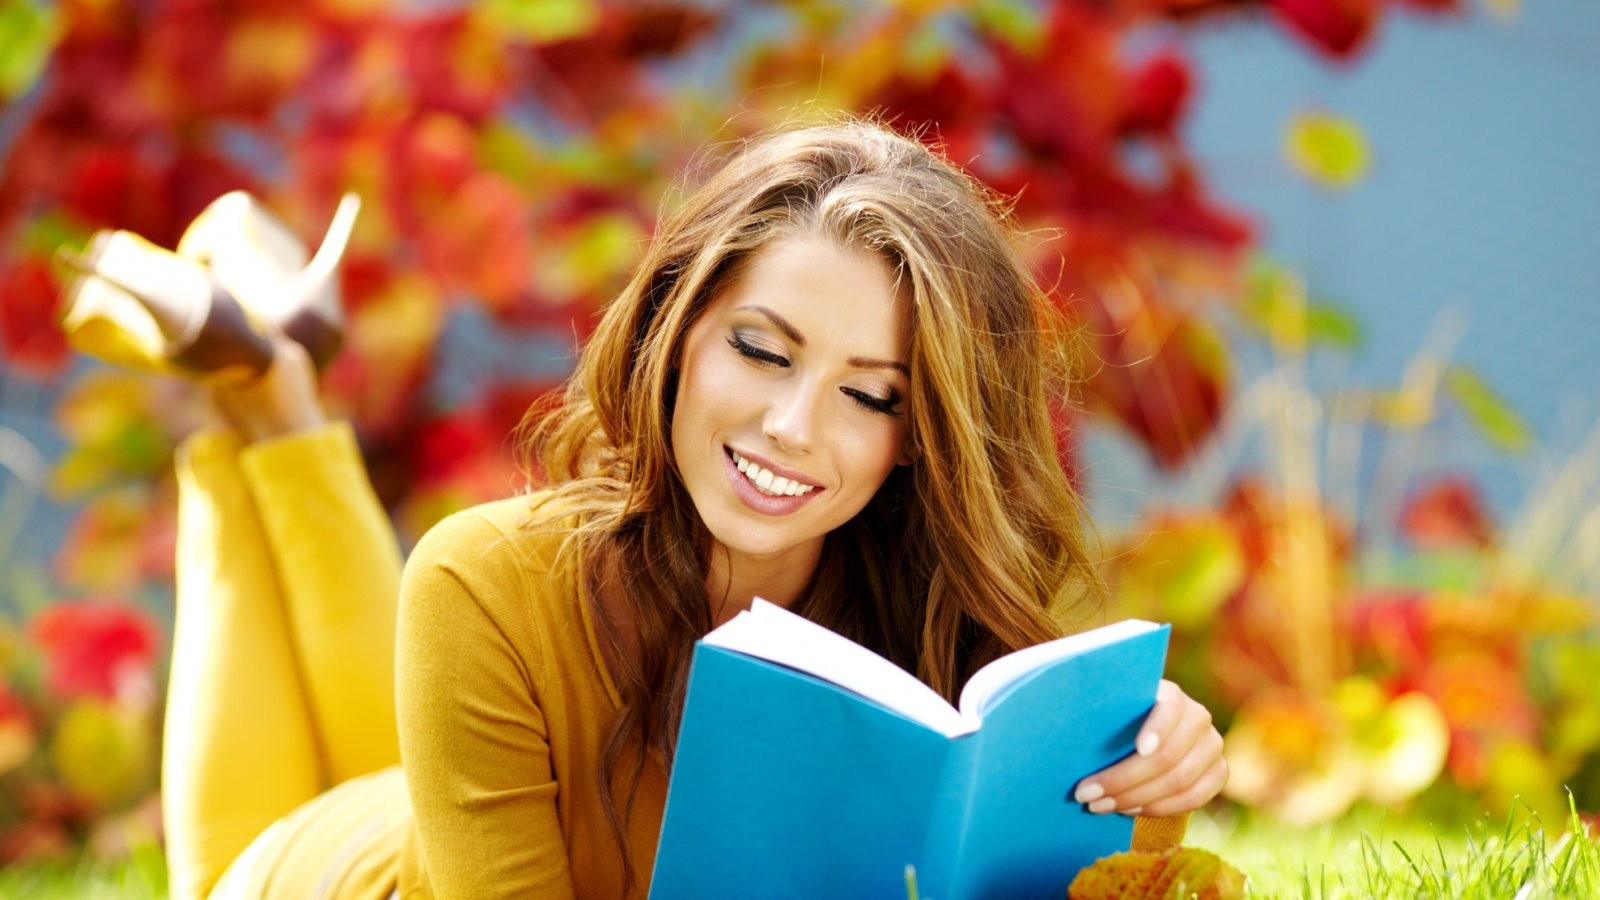 Girl Reading Book in Autumn Park wallpaper 1600x900